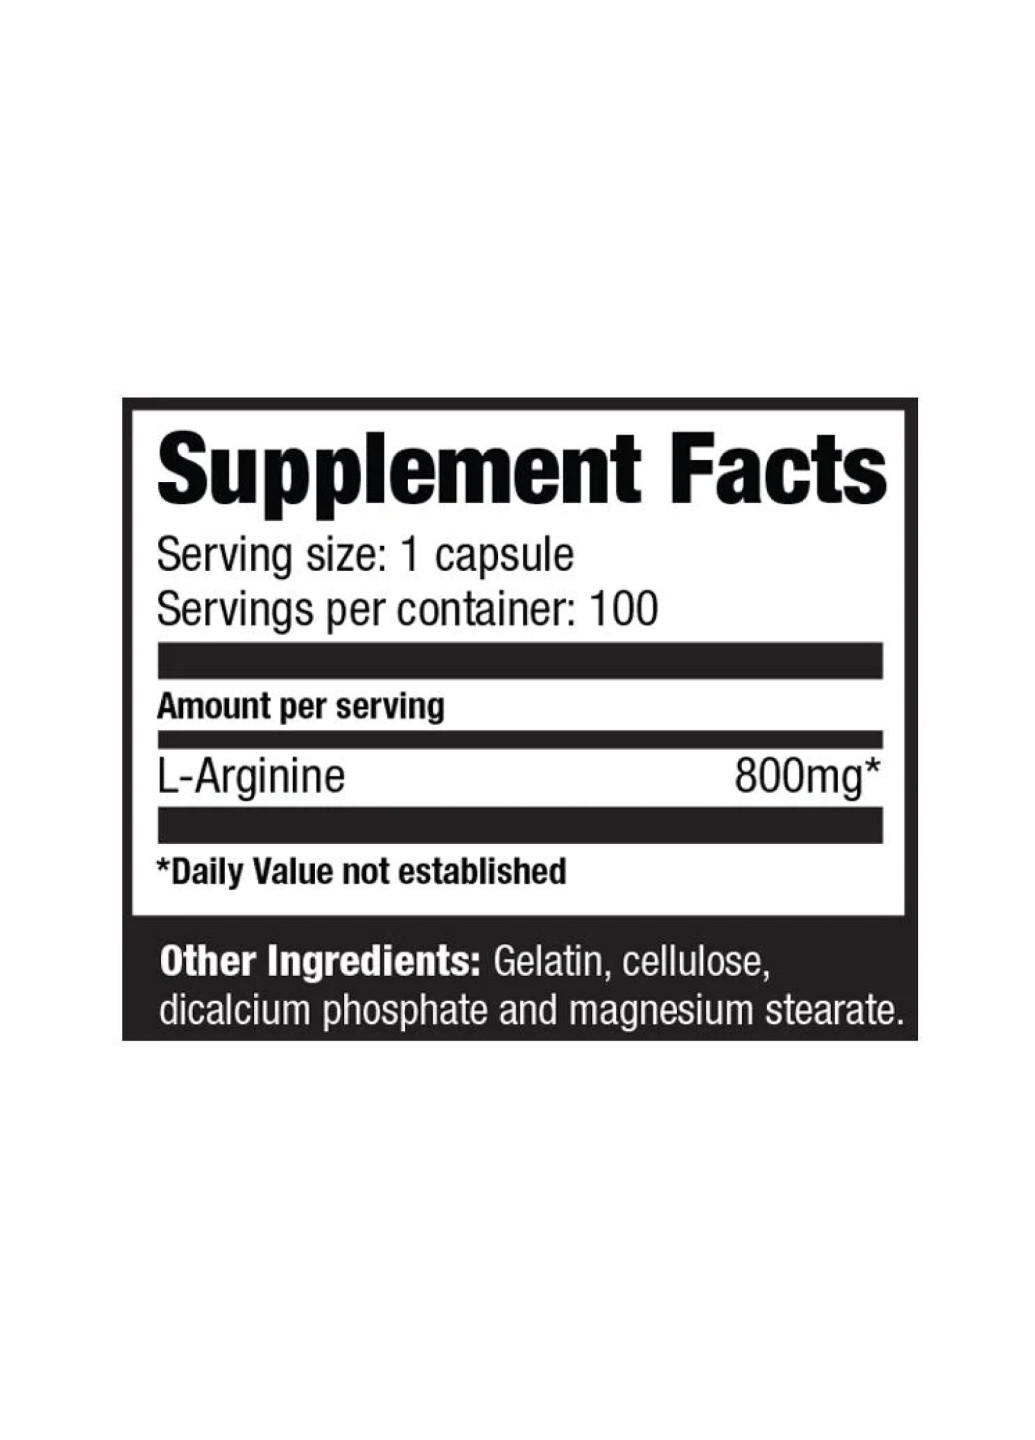 L-аргинин для восстановления Arginine Power 800 mg - 100 caps Ultimate Nutrition (270007876)